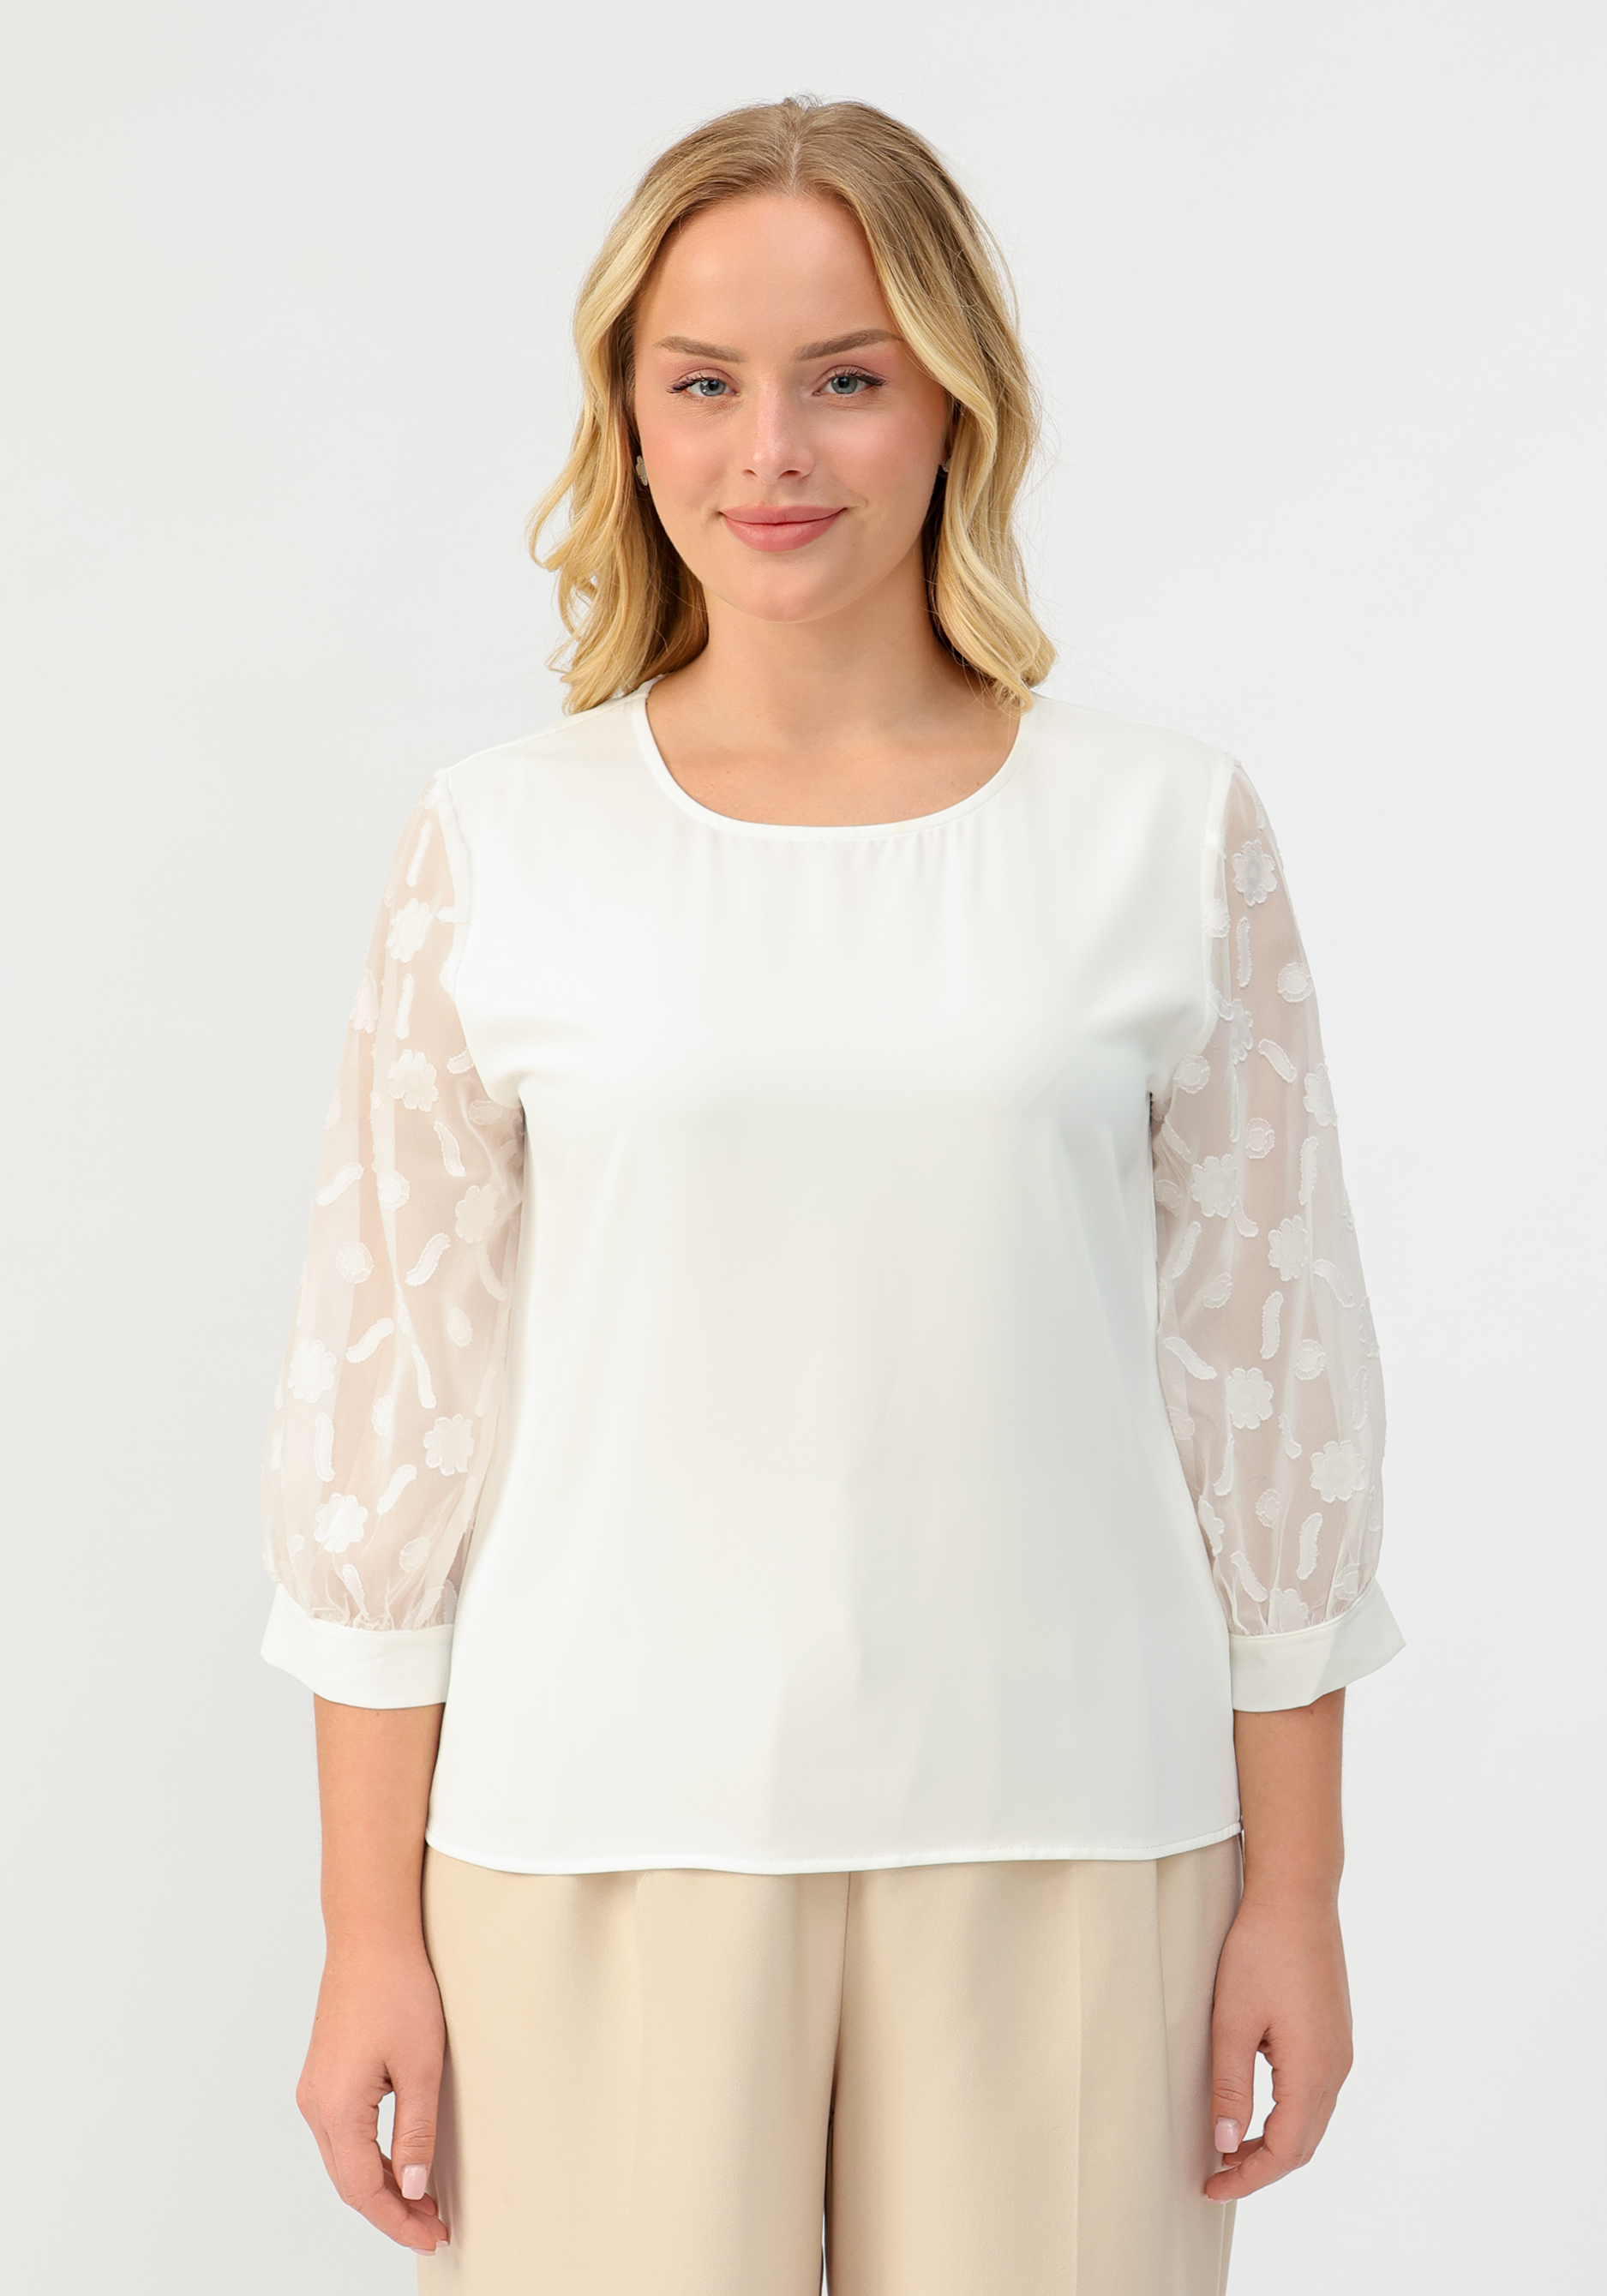 Блуза с шифоновыми рукавами 3 / 4 No name, размер 52-54, цвет белый - фото 4